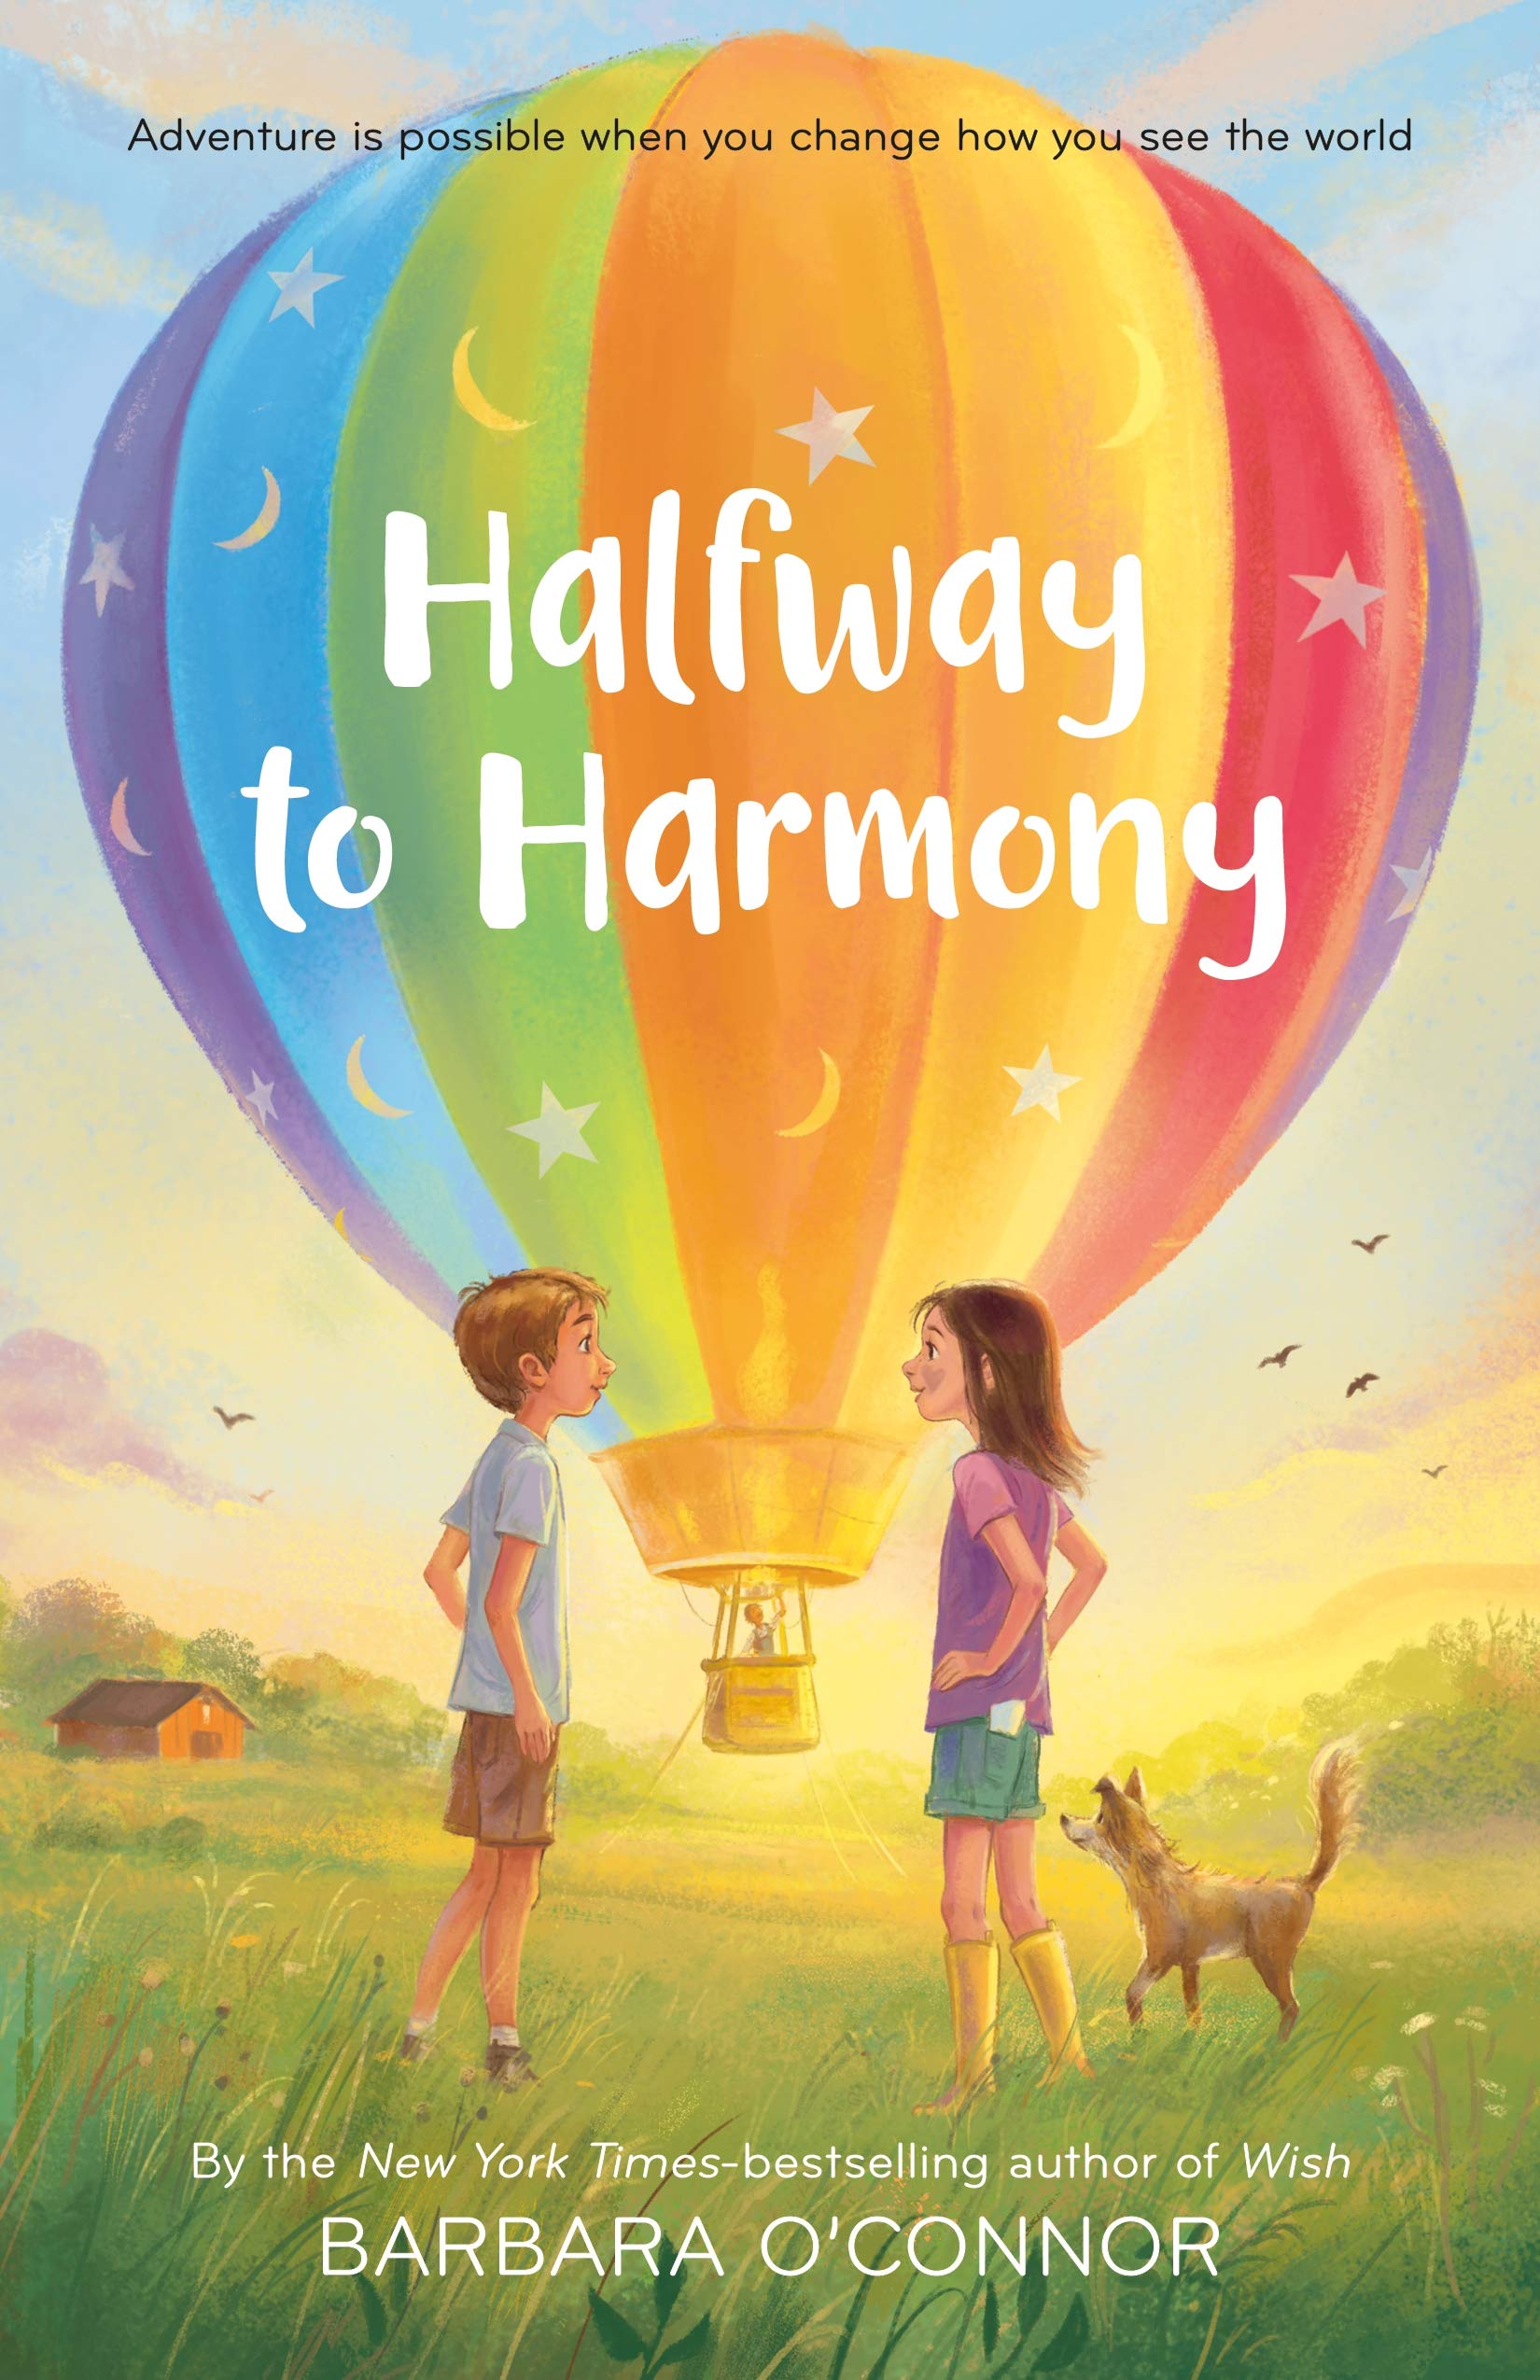 Image for "Halfway to Harmony"